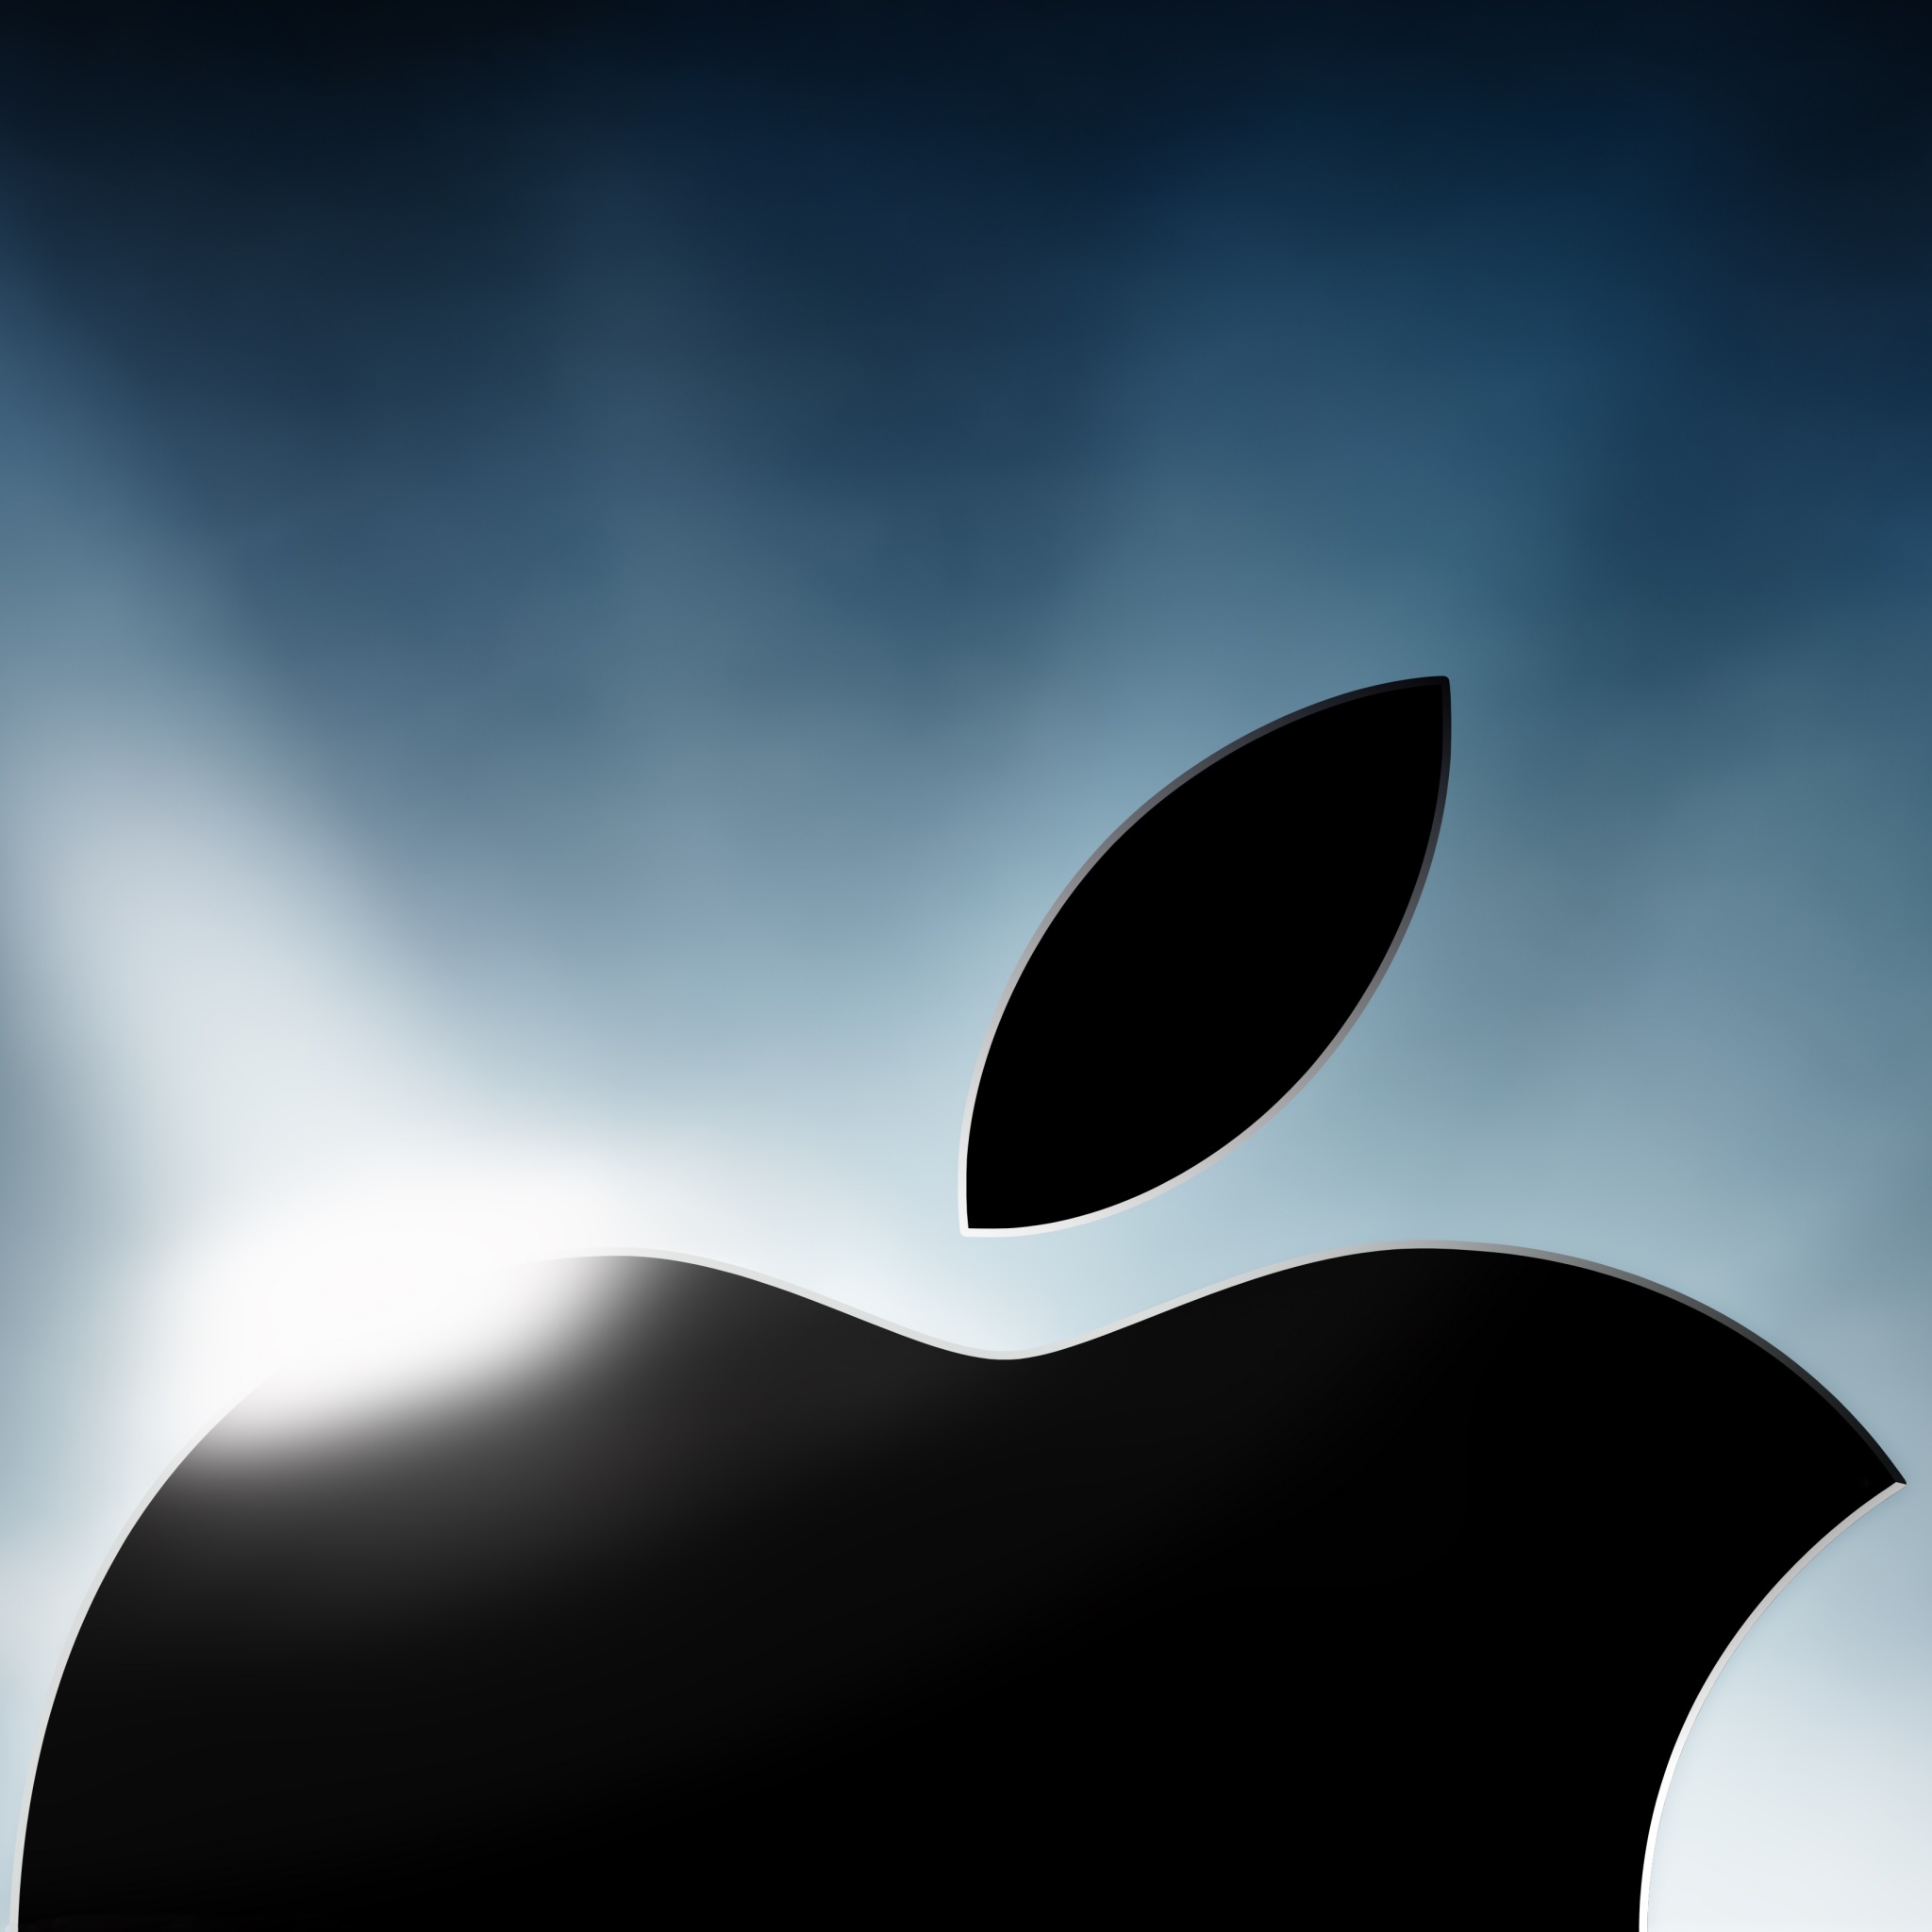 An apple logo on a silver background photo  Free Steve jobs Image on  Unsplash